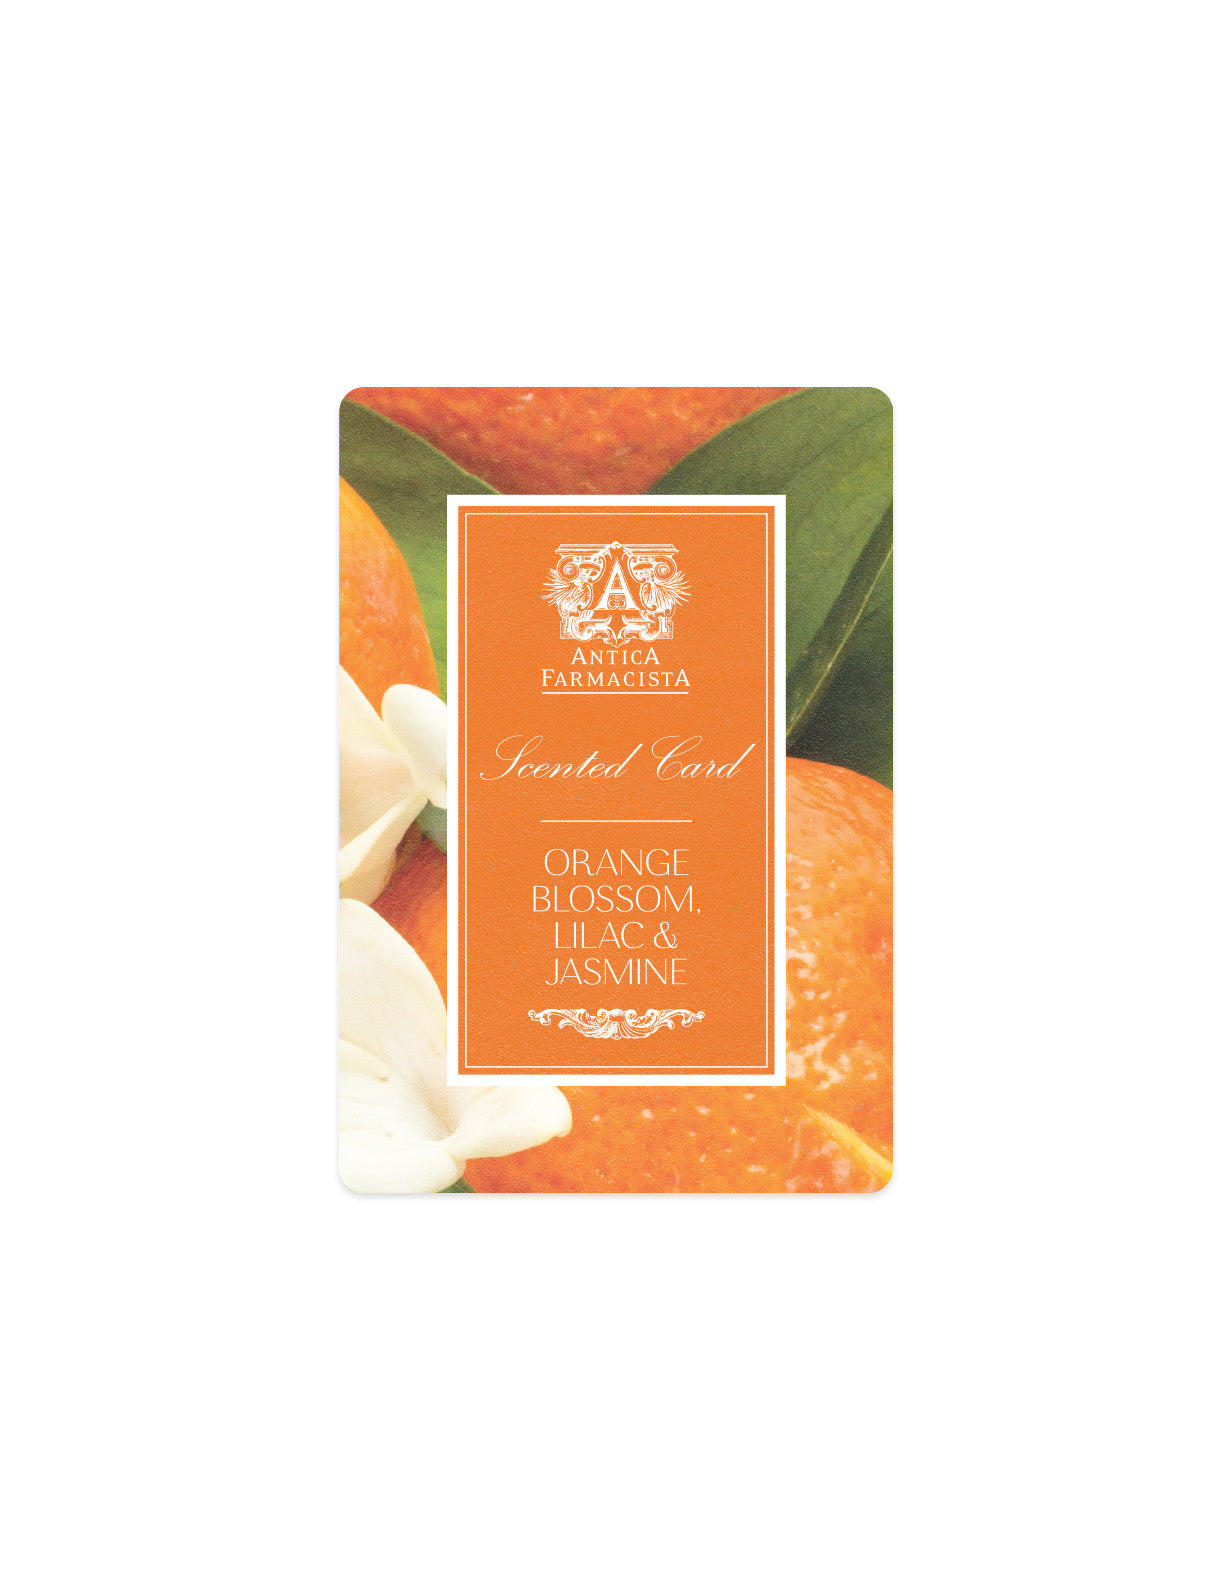 GWP - Scented Card - Orange Blossom, Lilac & Jasmine